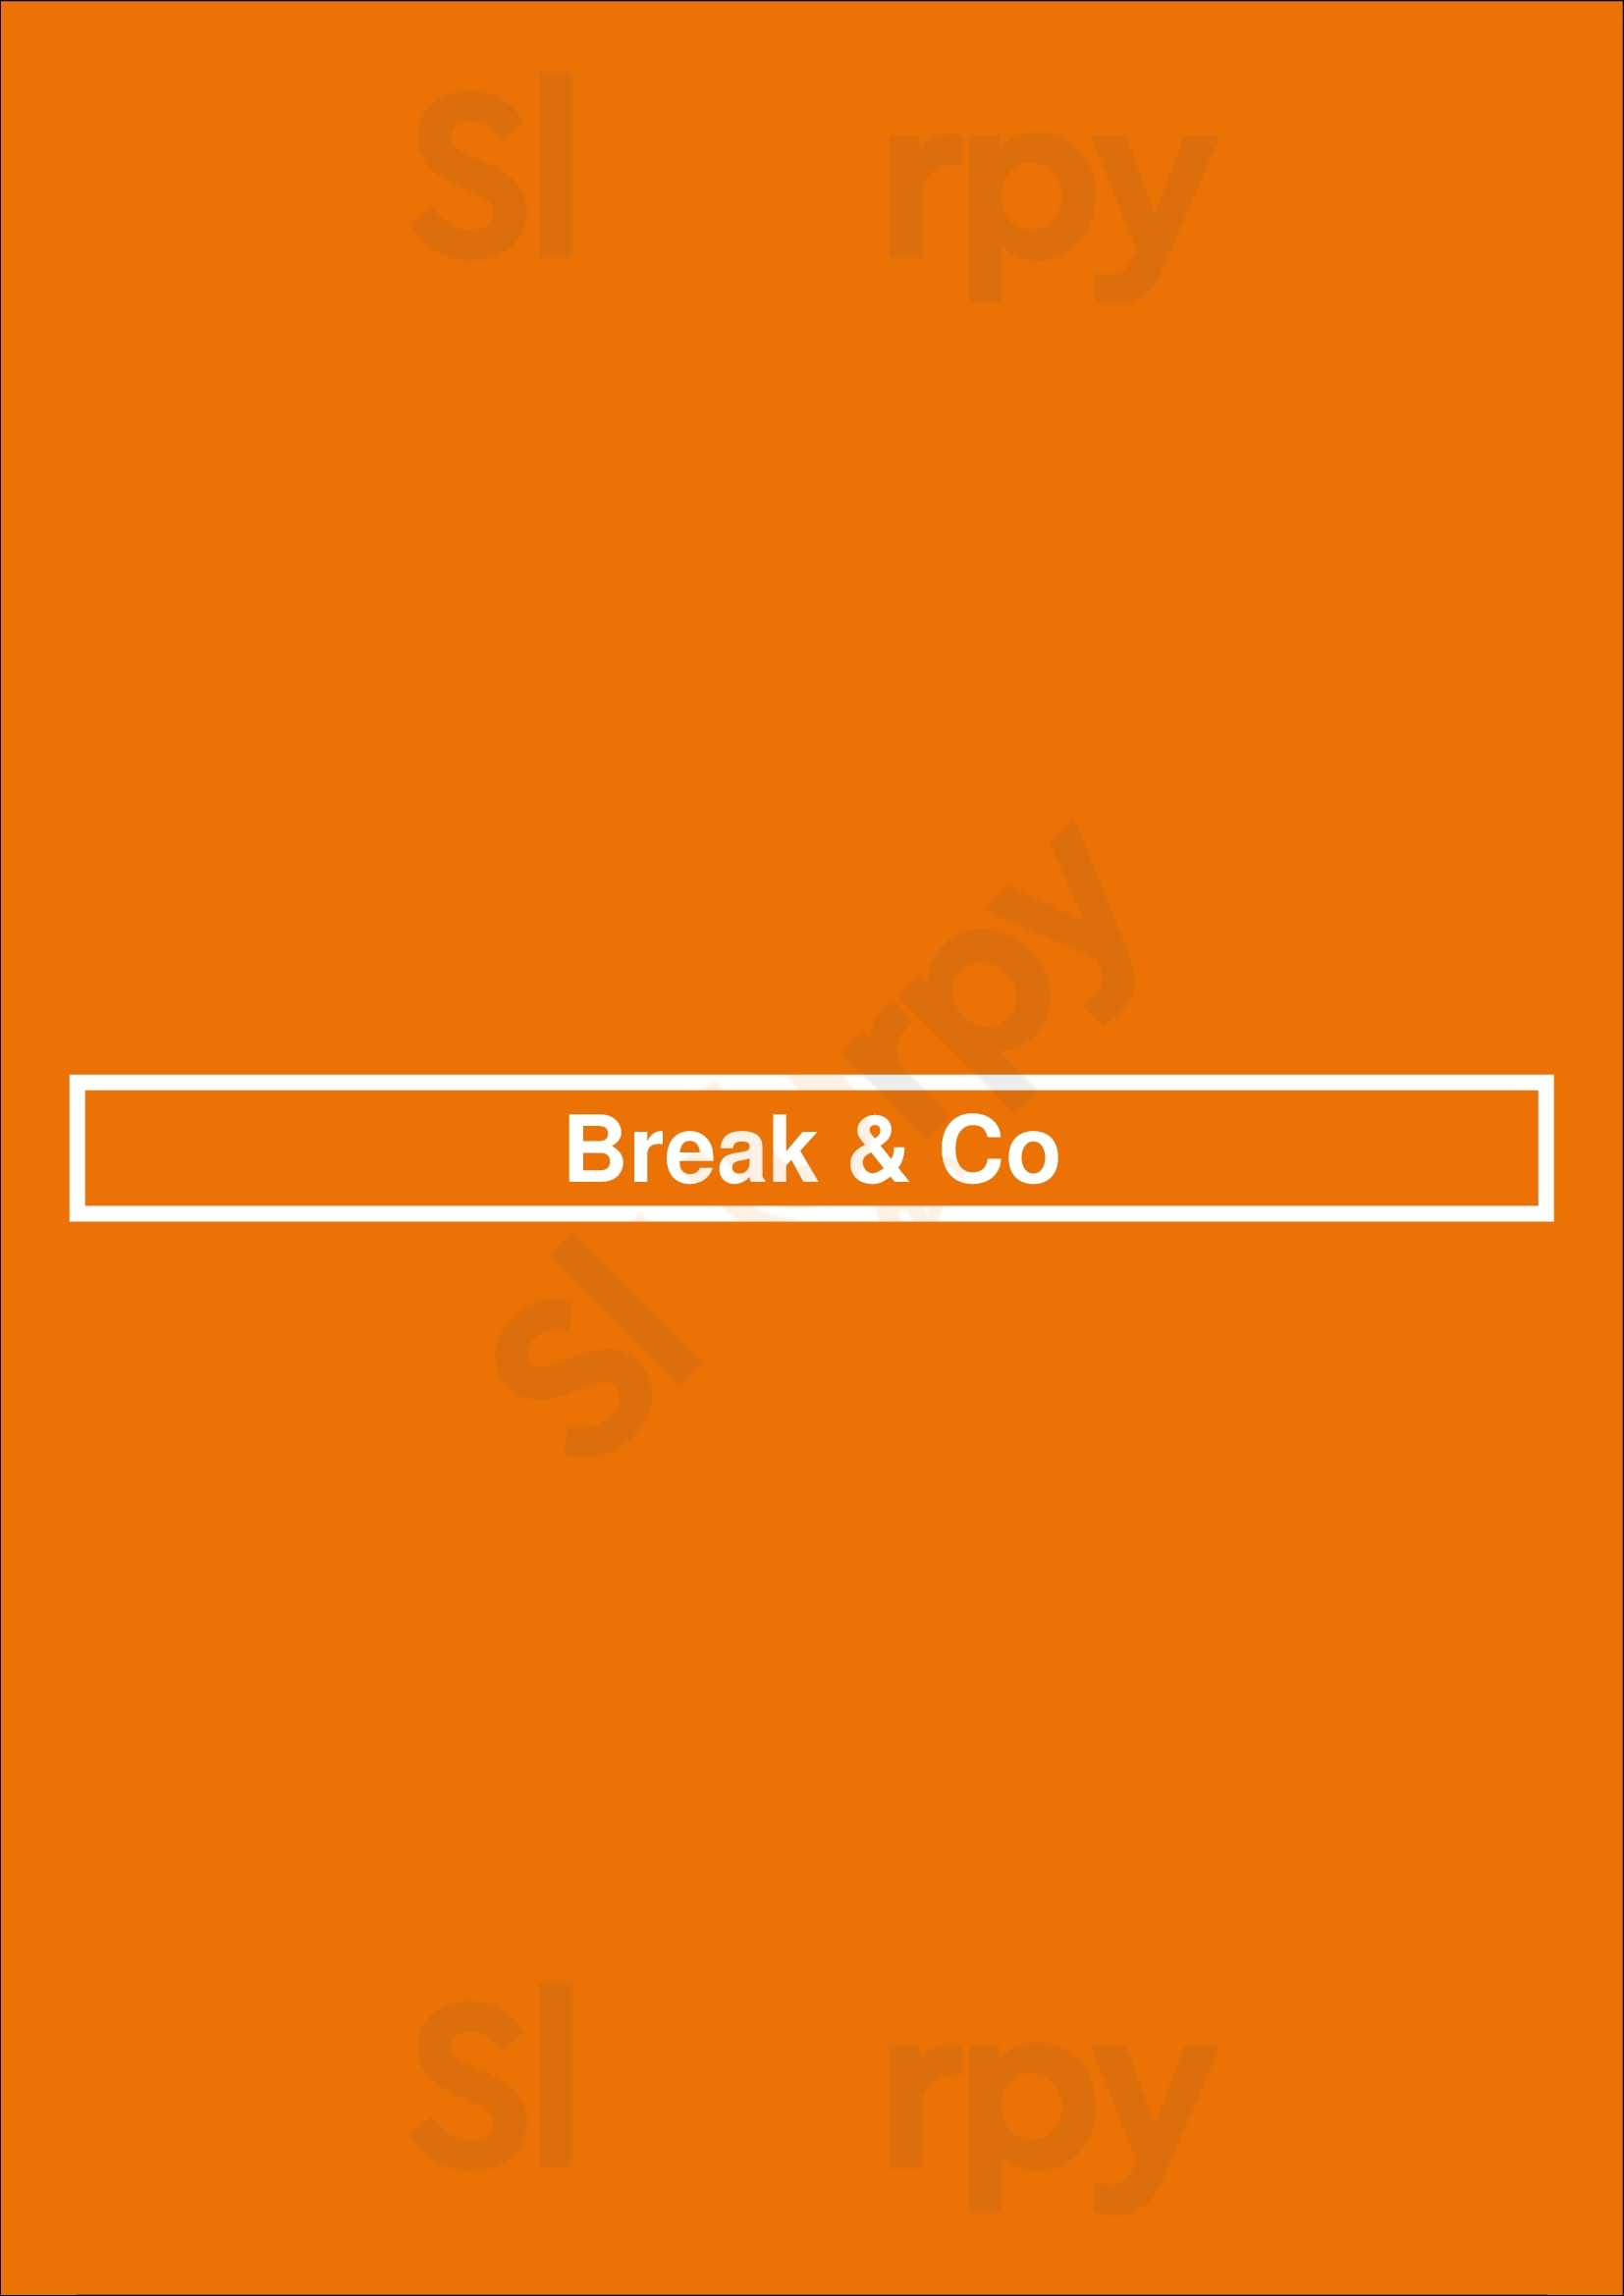 Break & Co New York City Menu - 1